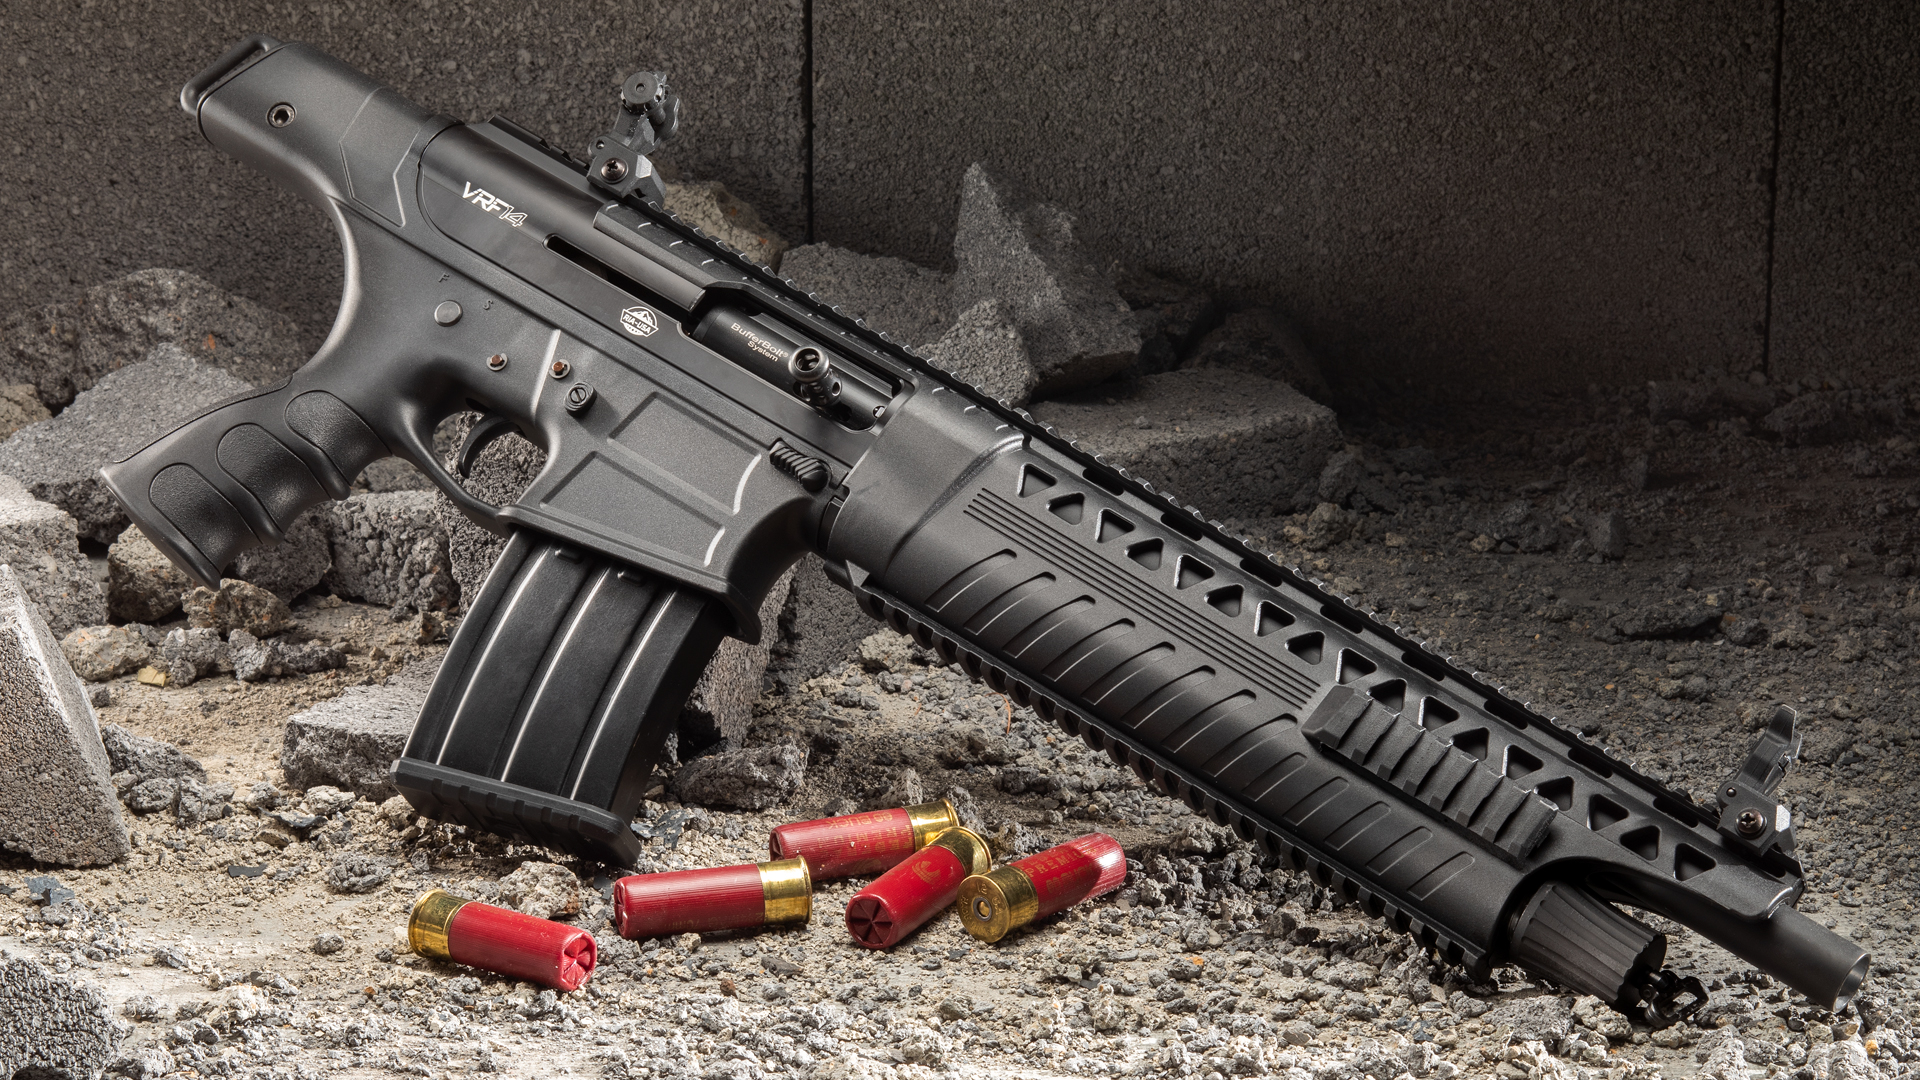 Armscor Vrf14 12 Gauge Shotgun Full Review Firearms News 46 Off 5955